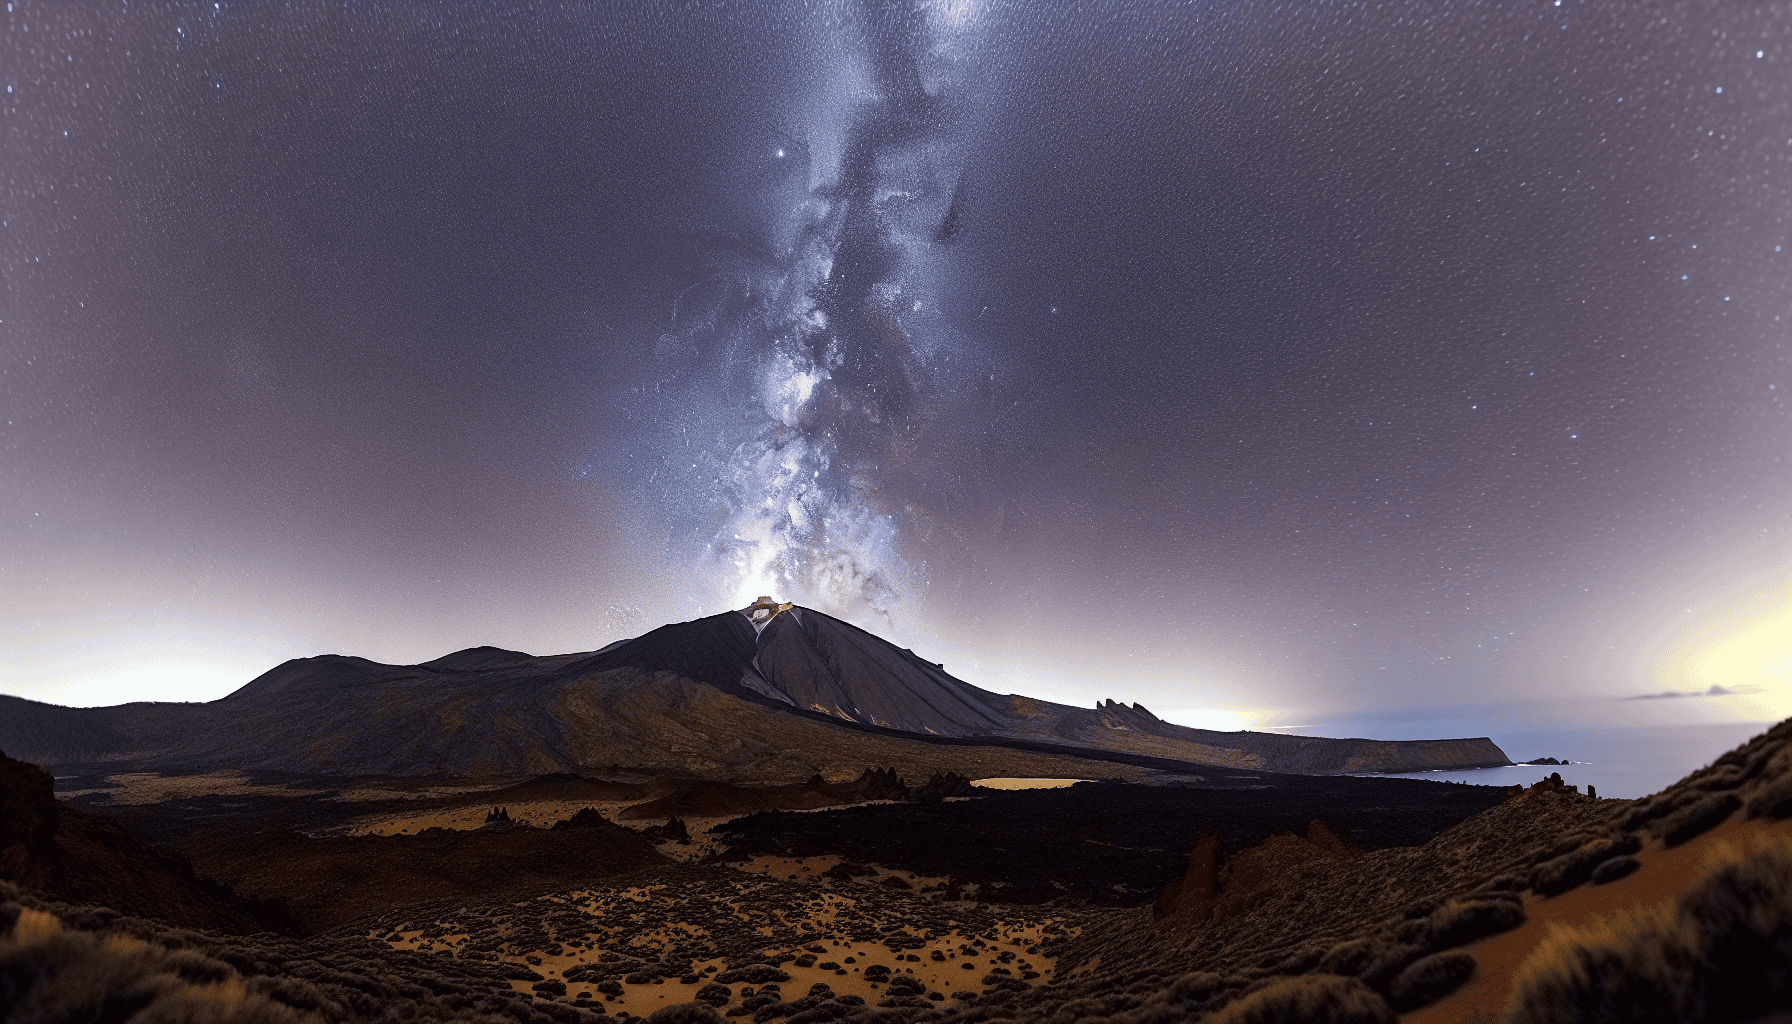 Stargazing at Teide National Park